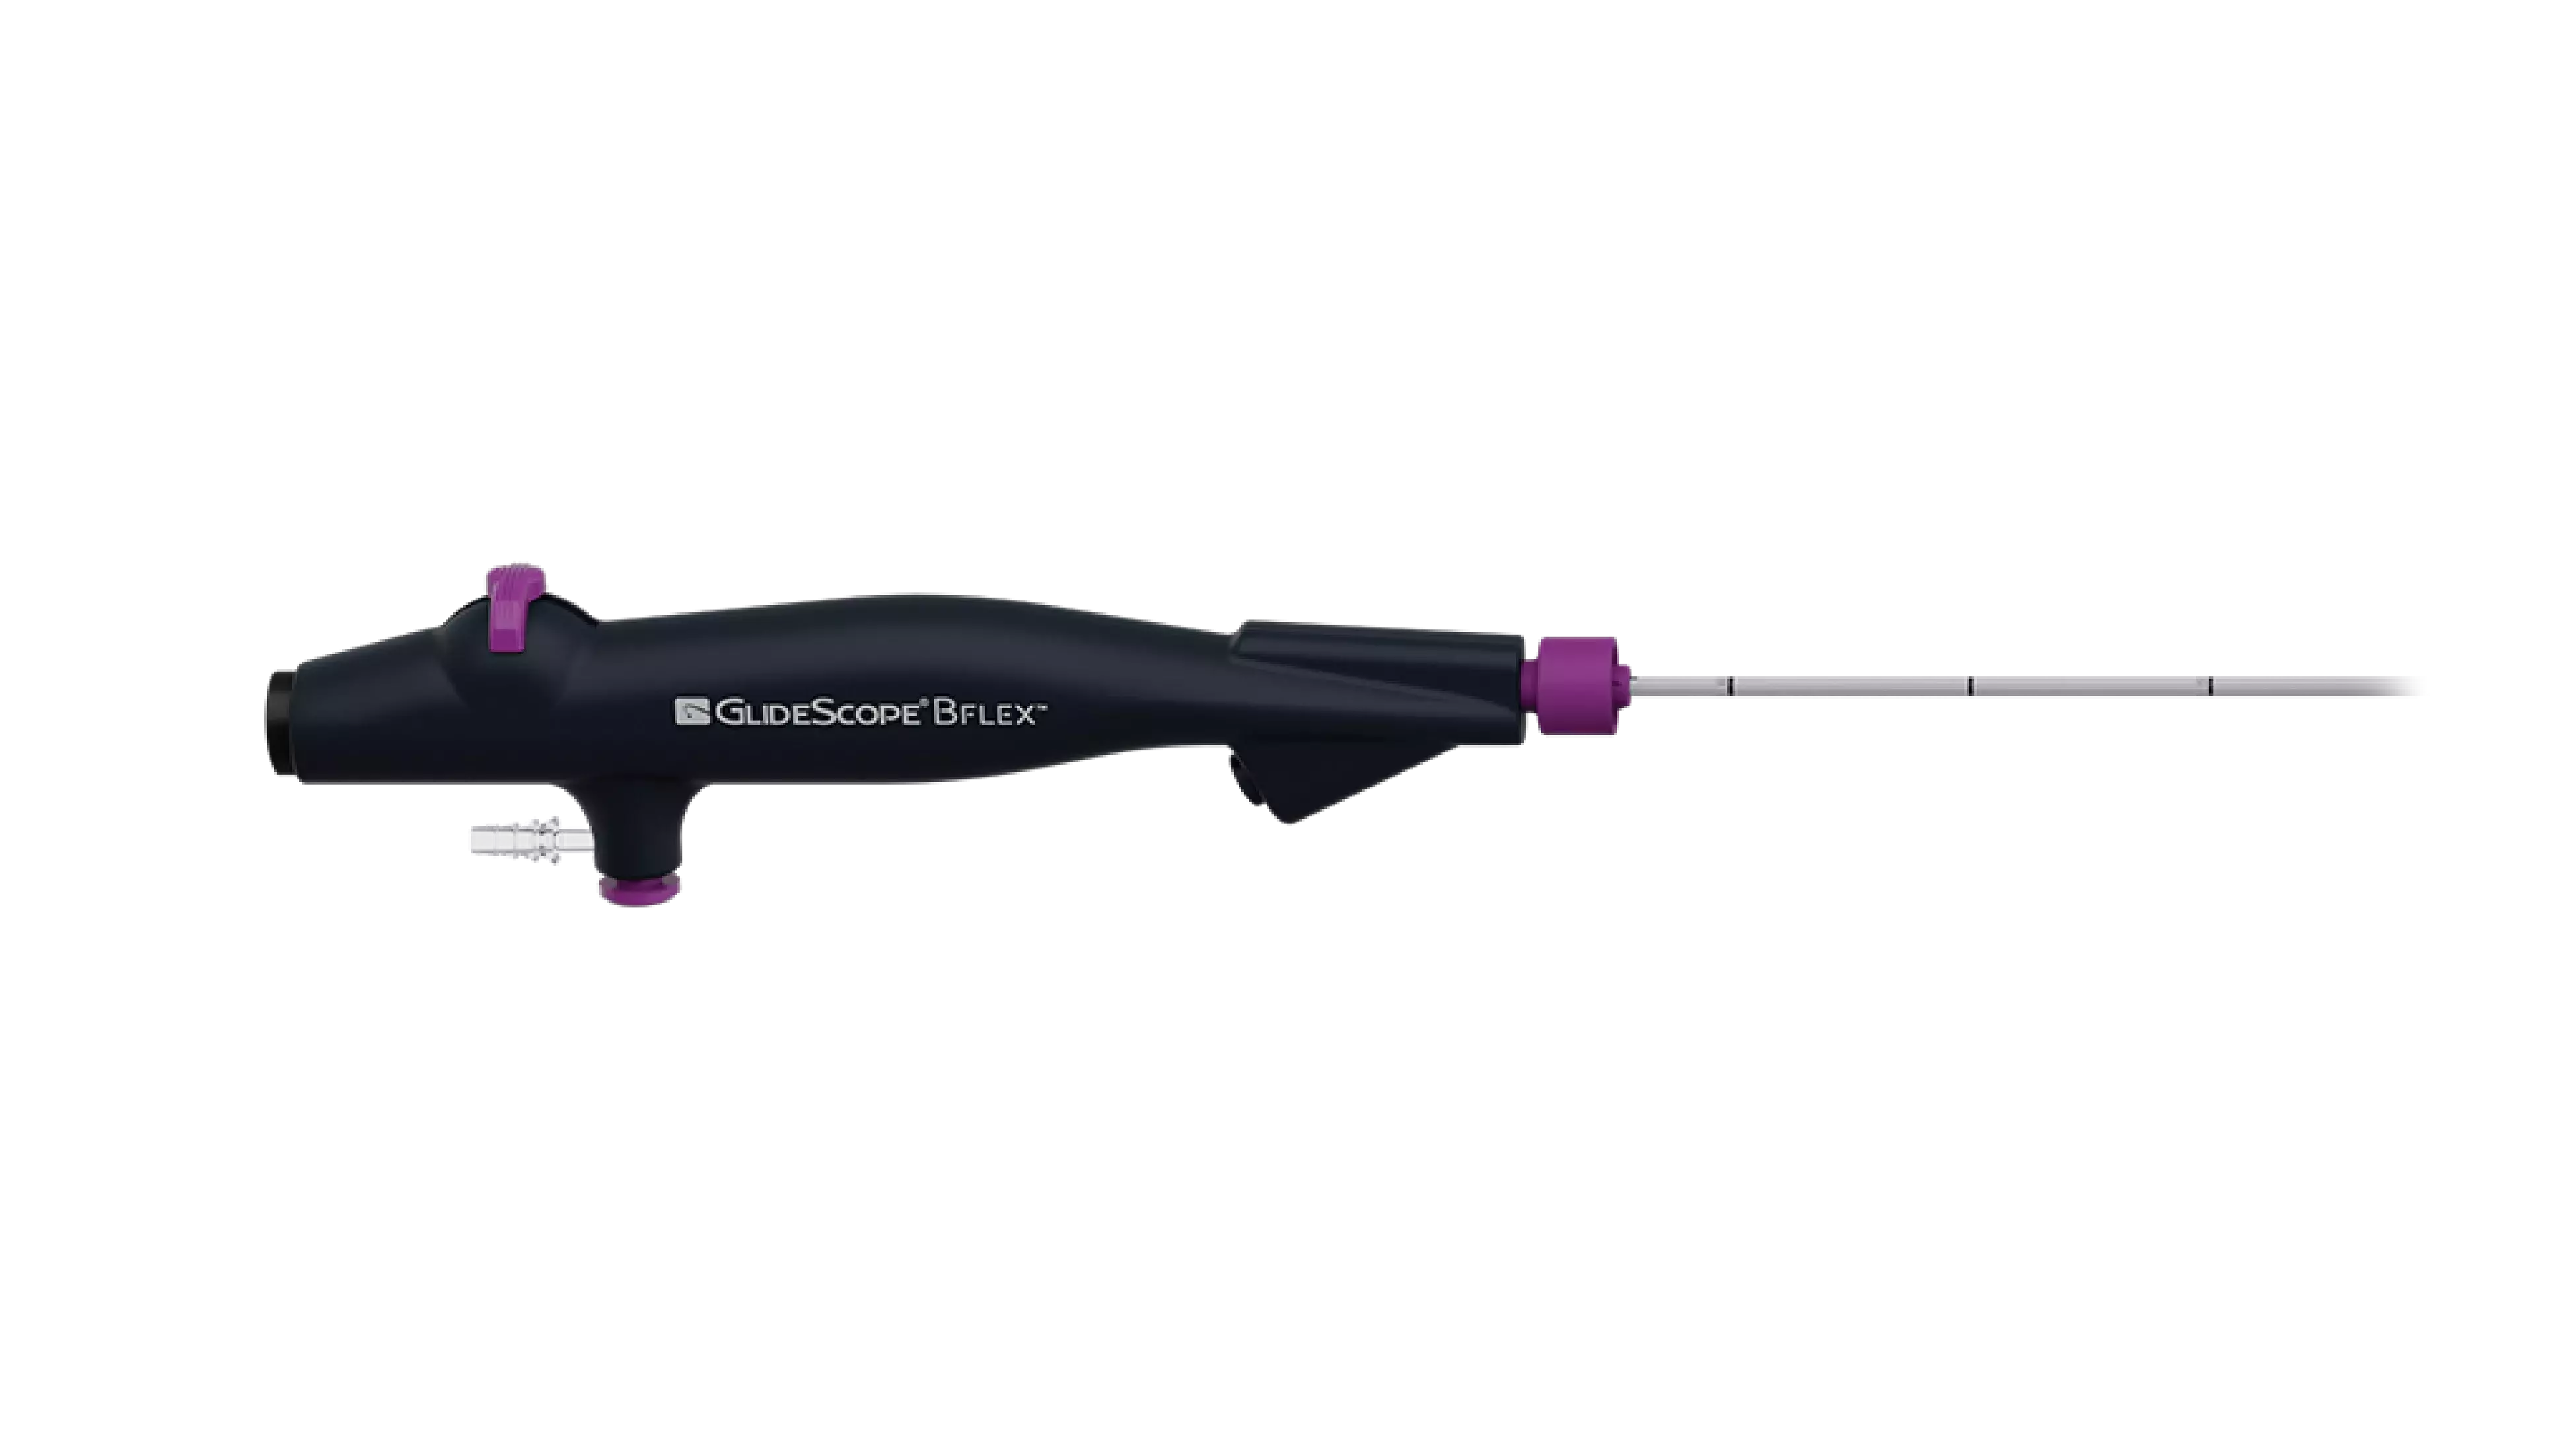 Bflex 3.8 single-use bronchoscope